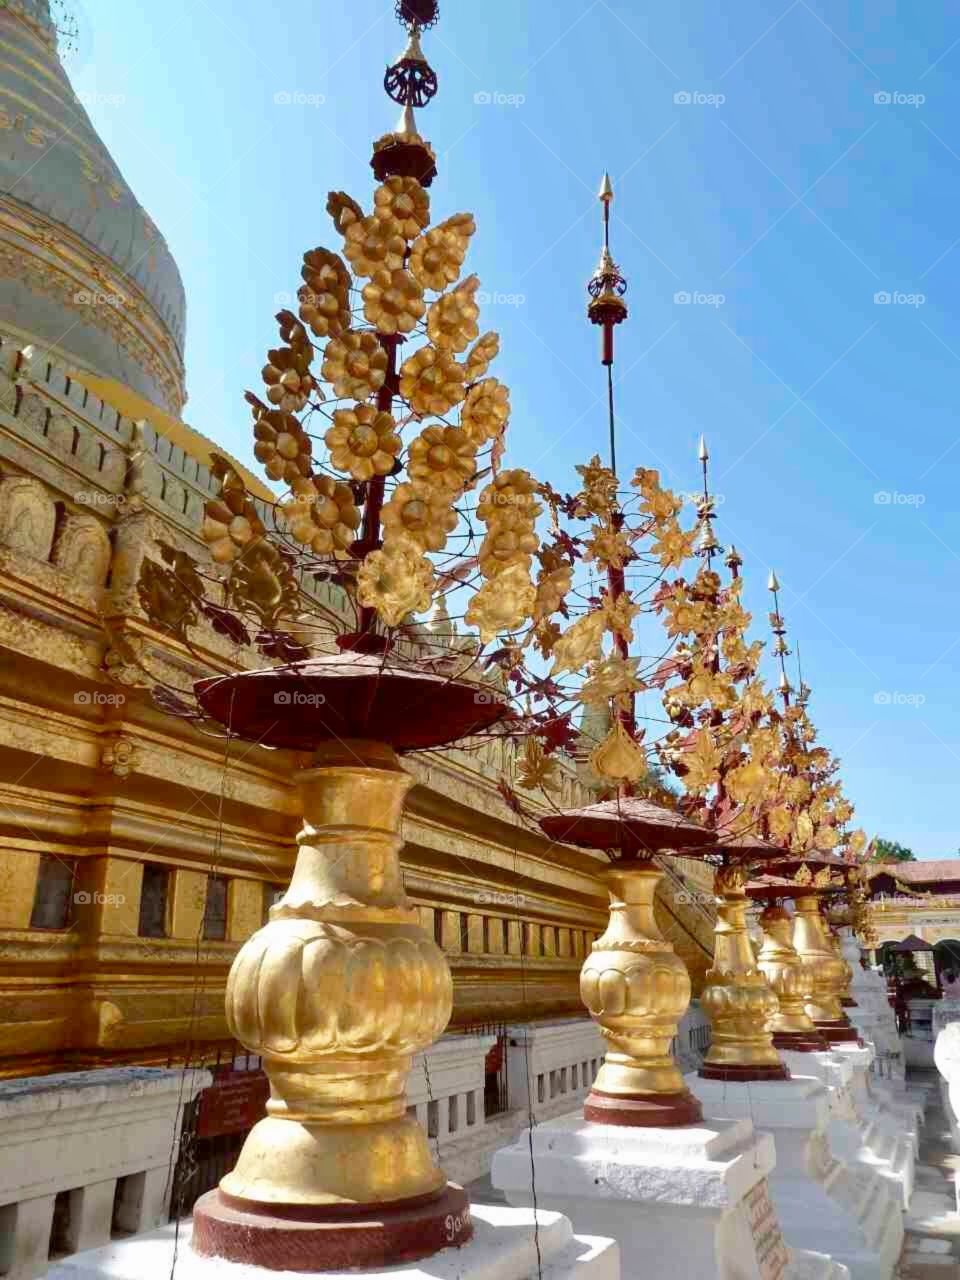 Golden leaves surround a golden temple